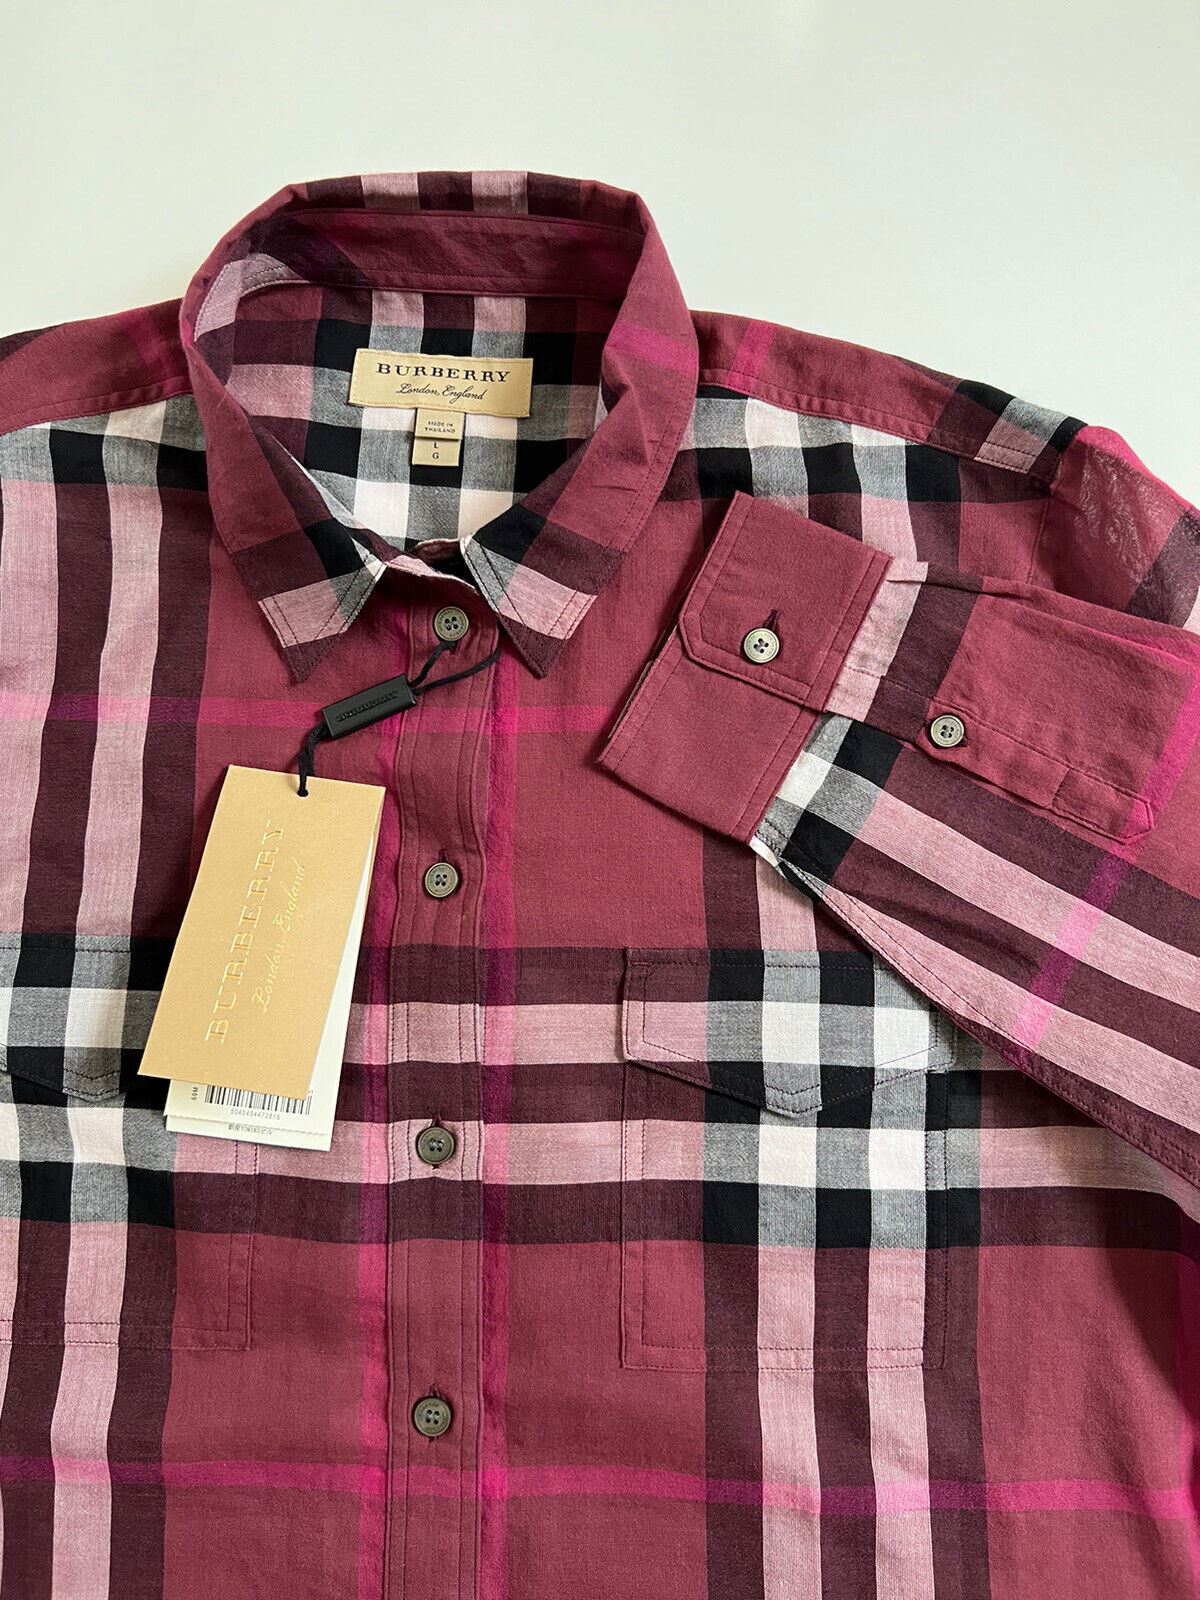 NWT $350 Burberry Women's Regency Purple Cotton Button-Up Shirt L